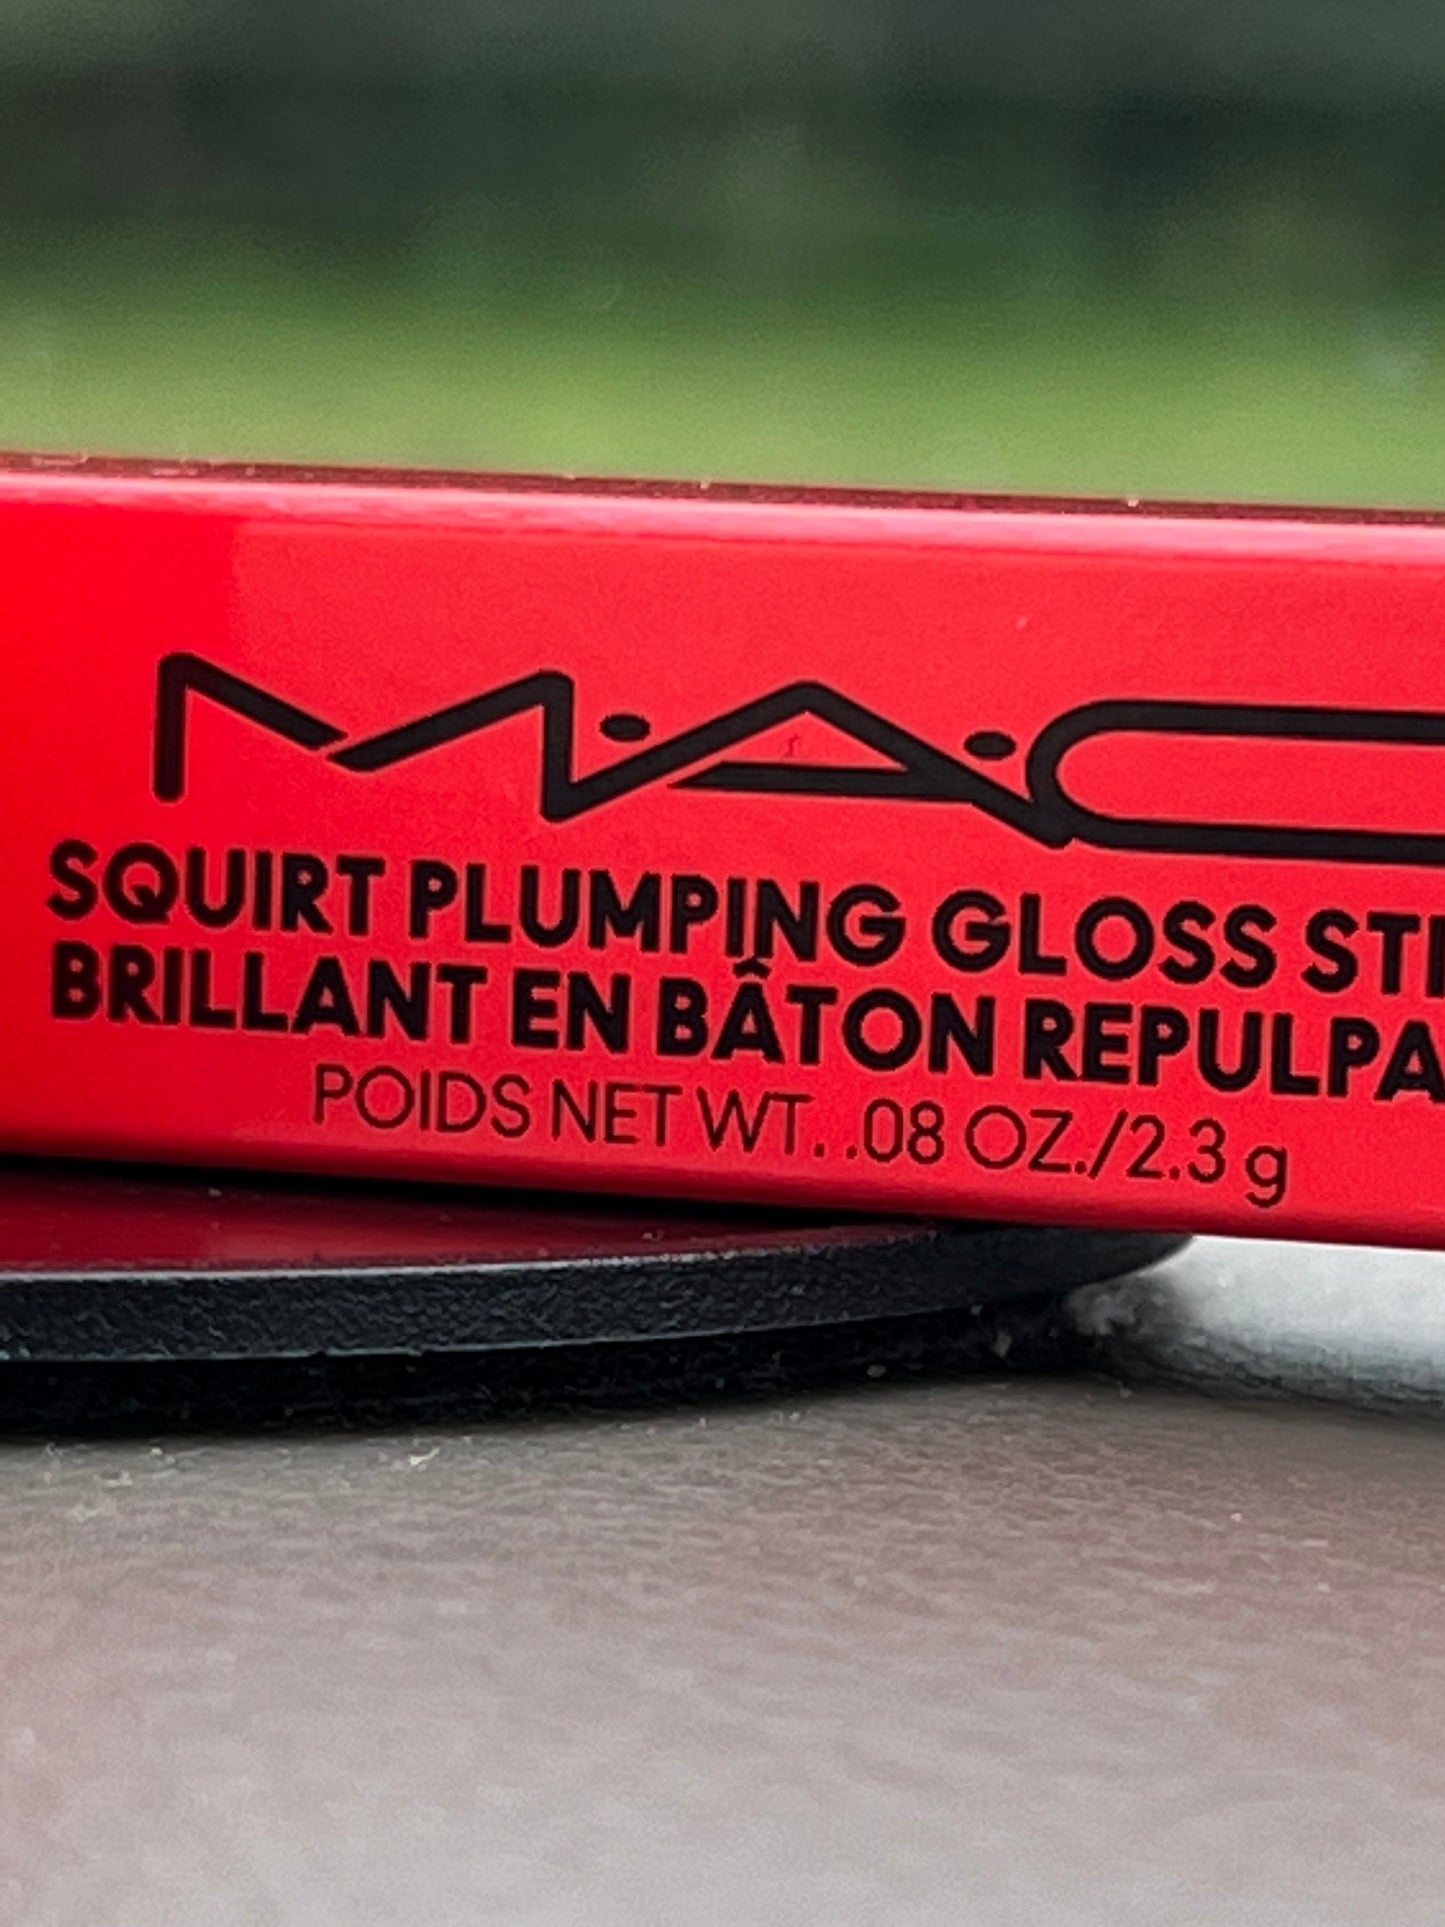 MAC Squirt Plumping Gloss Stick in HEAT SENSOR